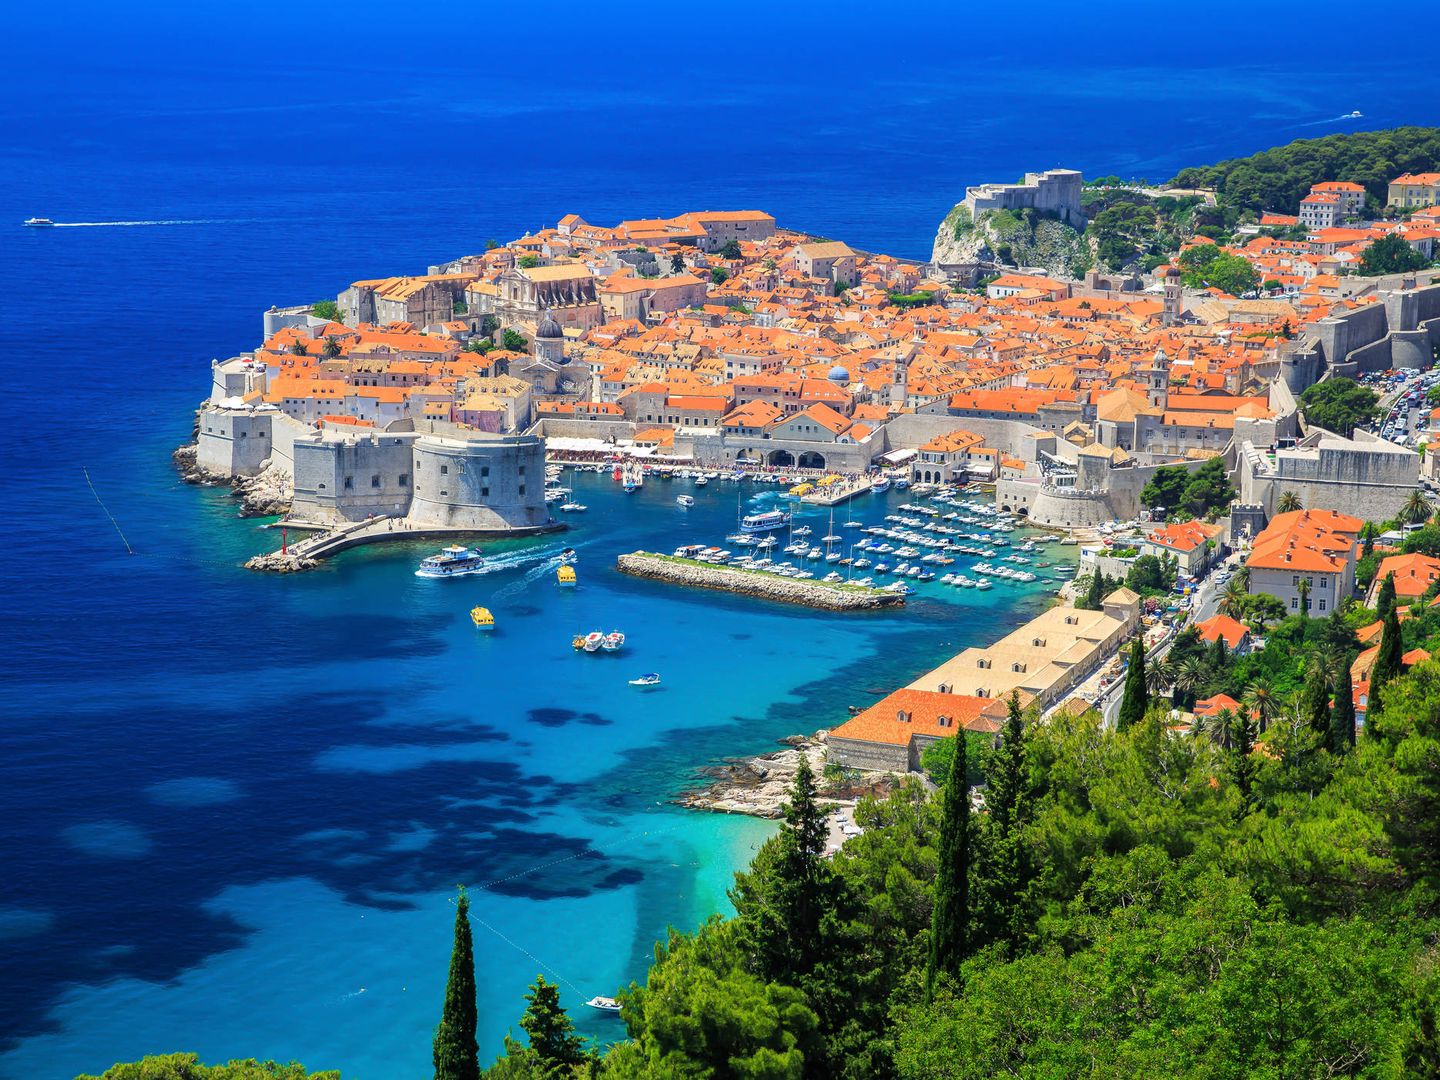 Dubrovnik. (iStock)